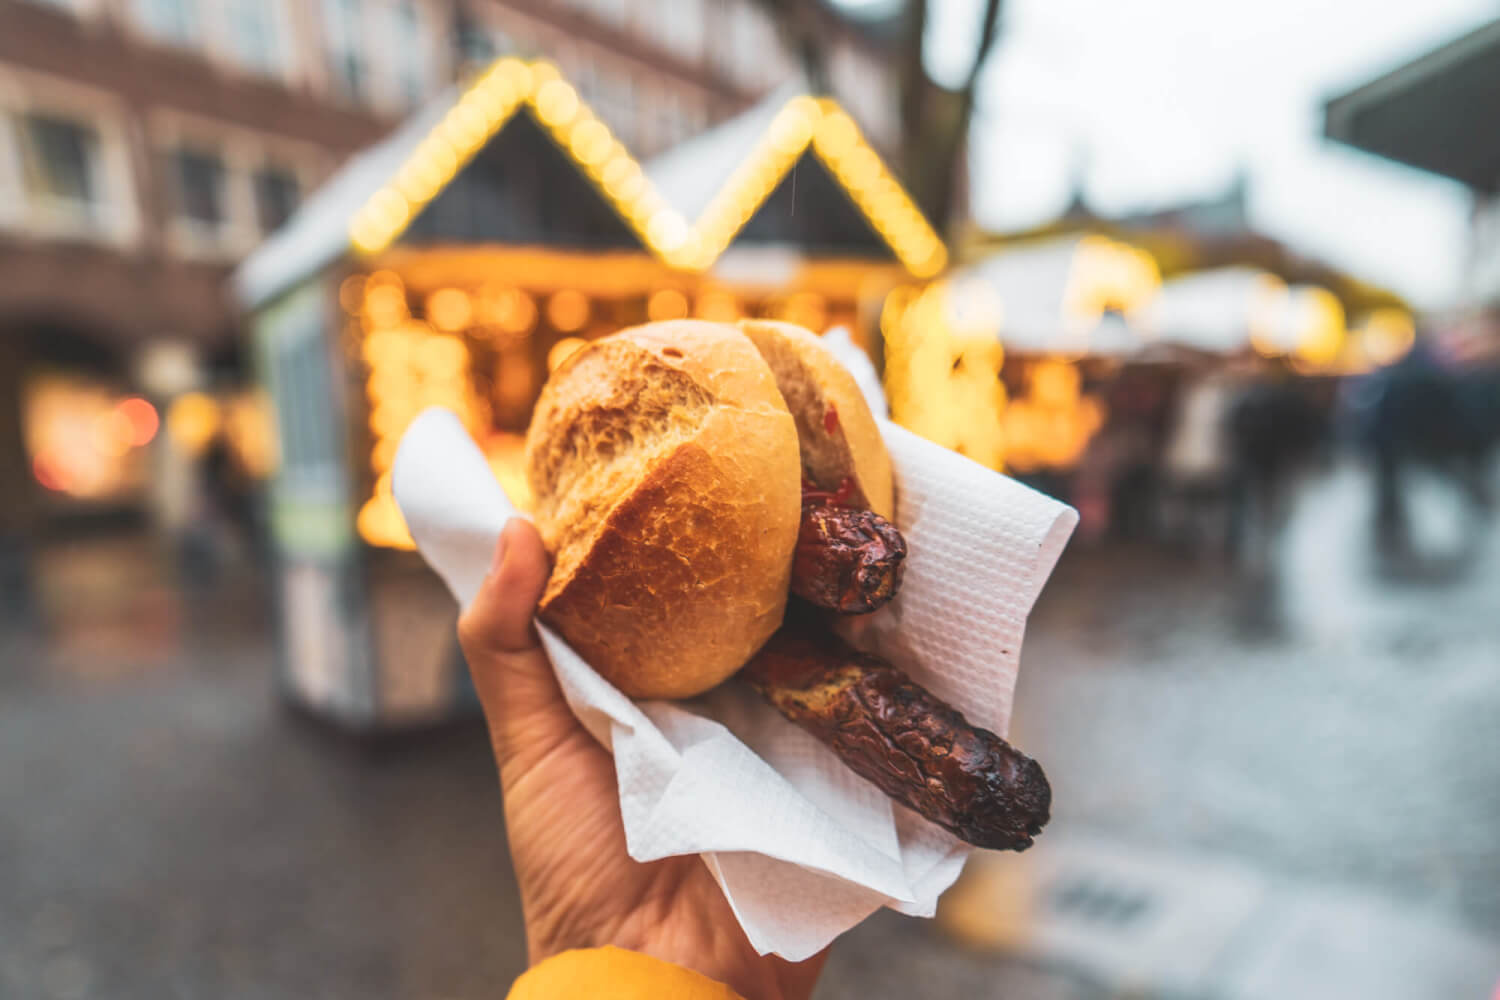 Sausage in a bun at Dusseldorf Christmas Market